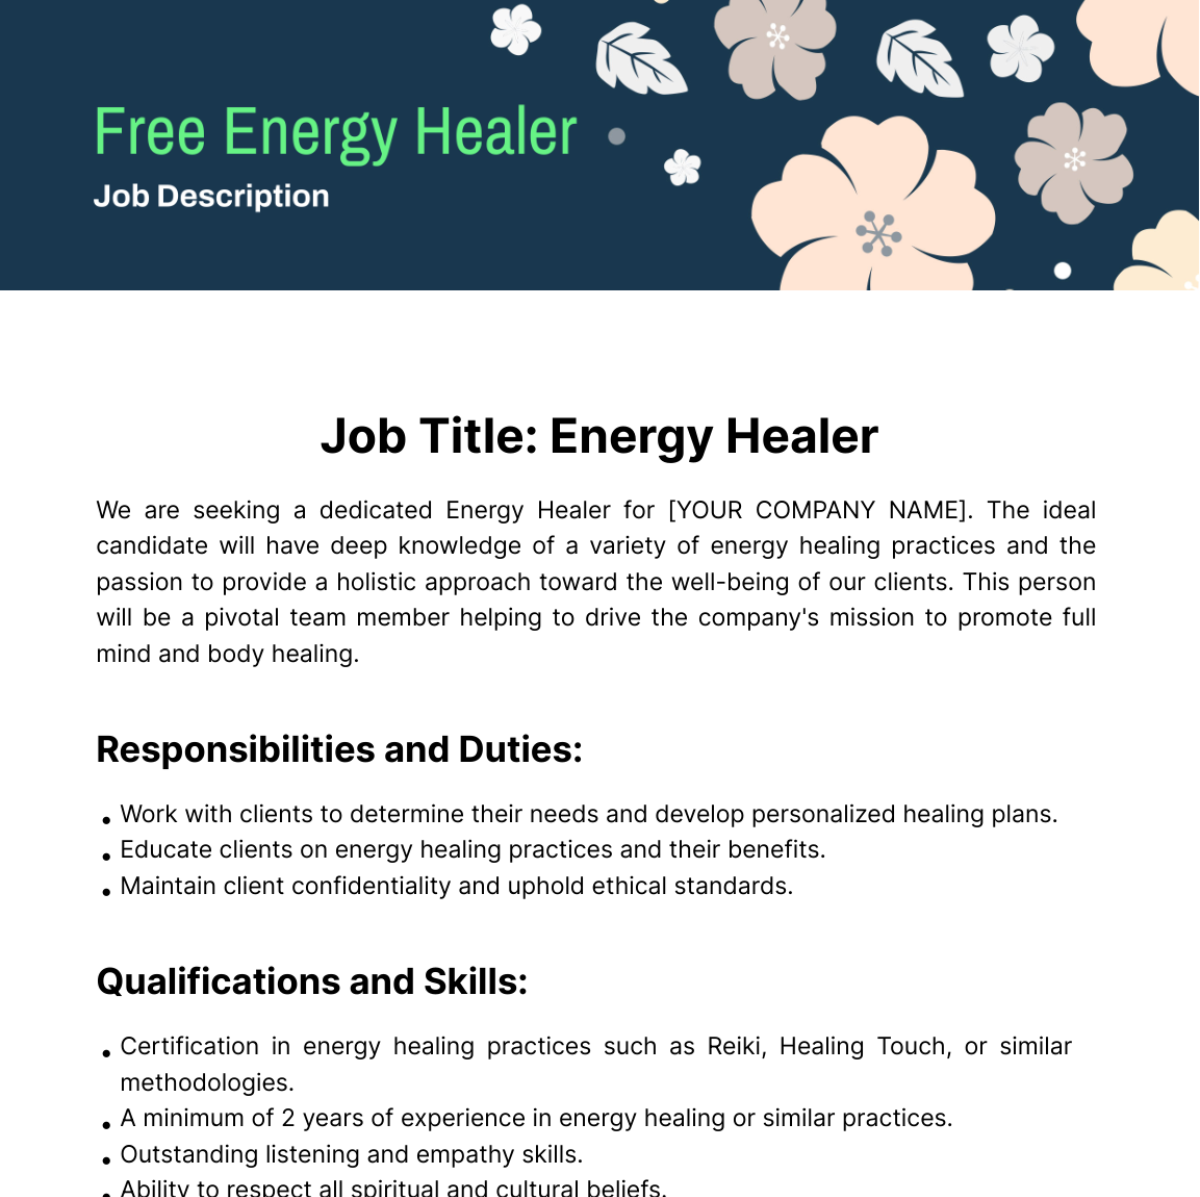 Free Energy Healer Job Description Template